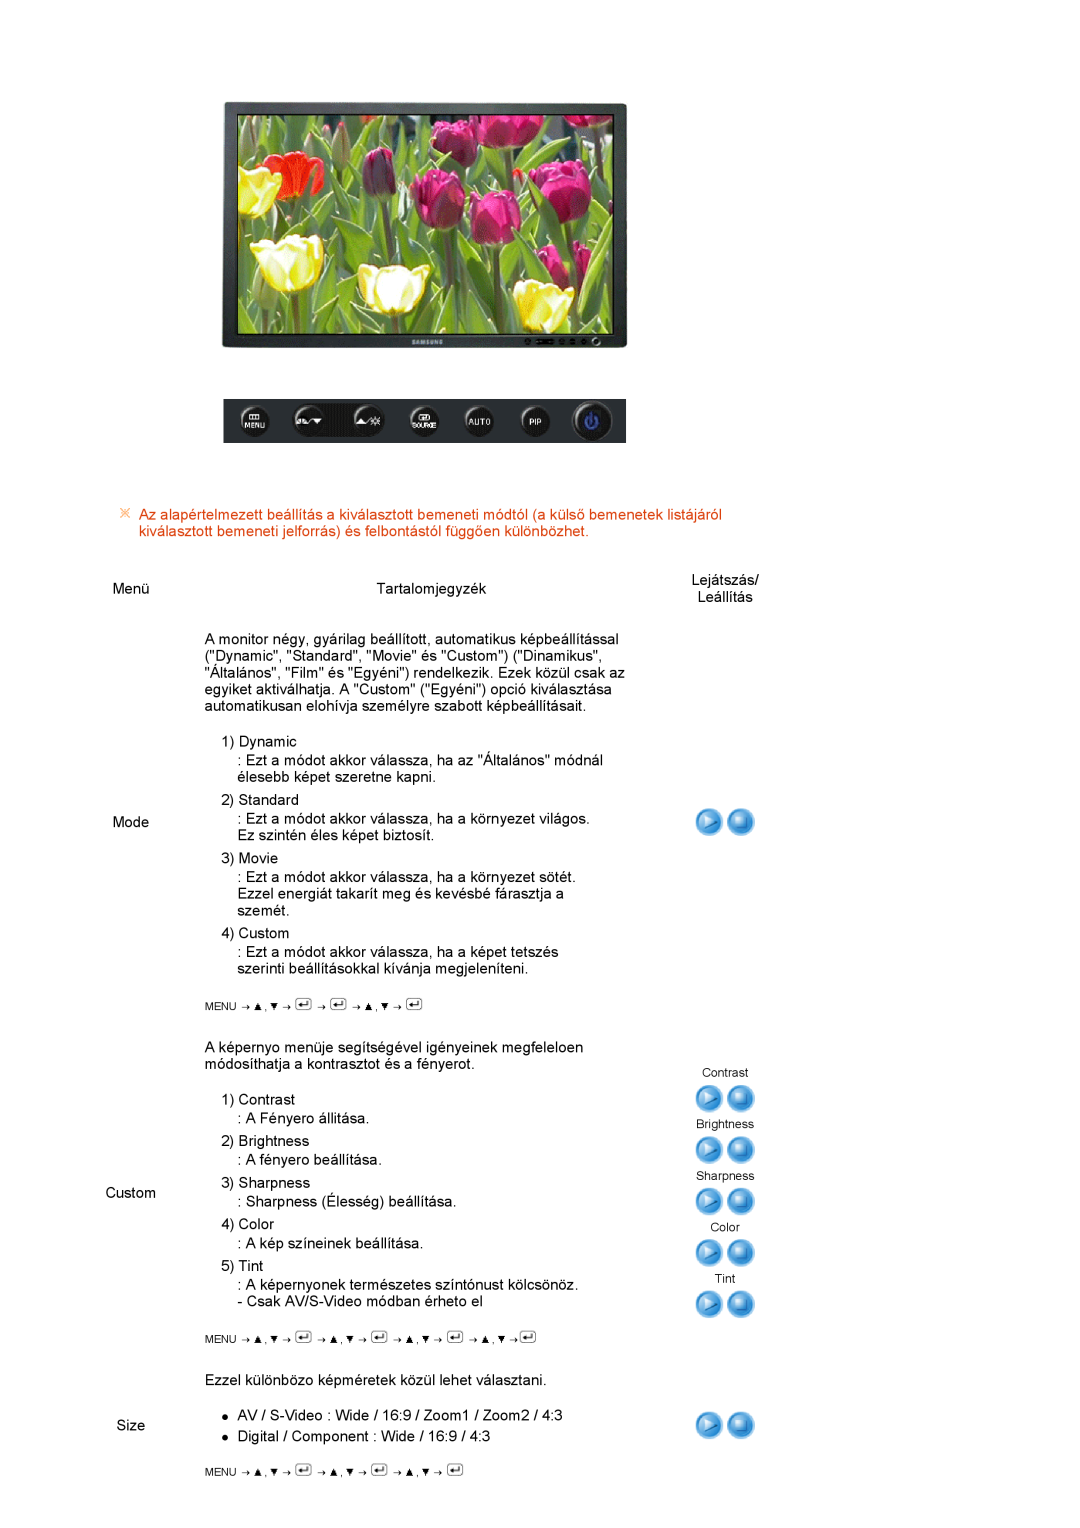 Samsung LS27HUBCB/EDC, LS27HUBCBS/EDC manual Lejátszás, Contrast Brightness Sharpness Color Tint 